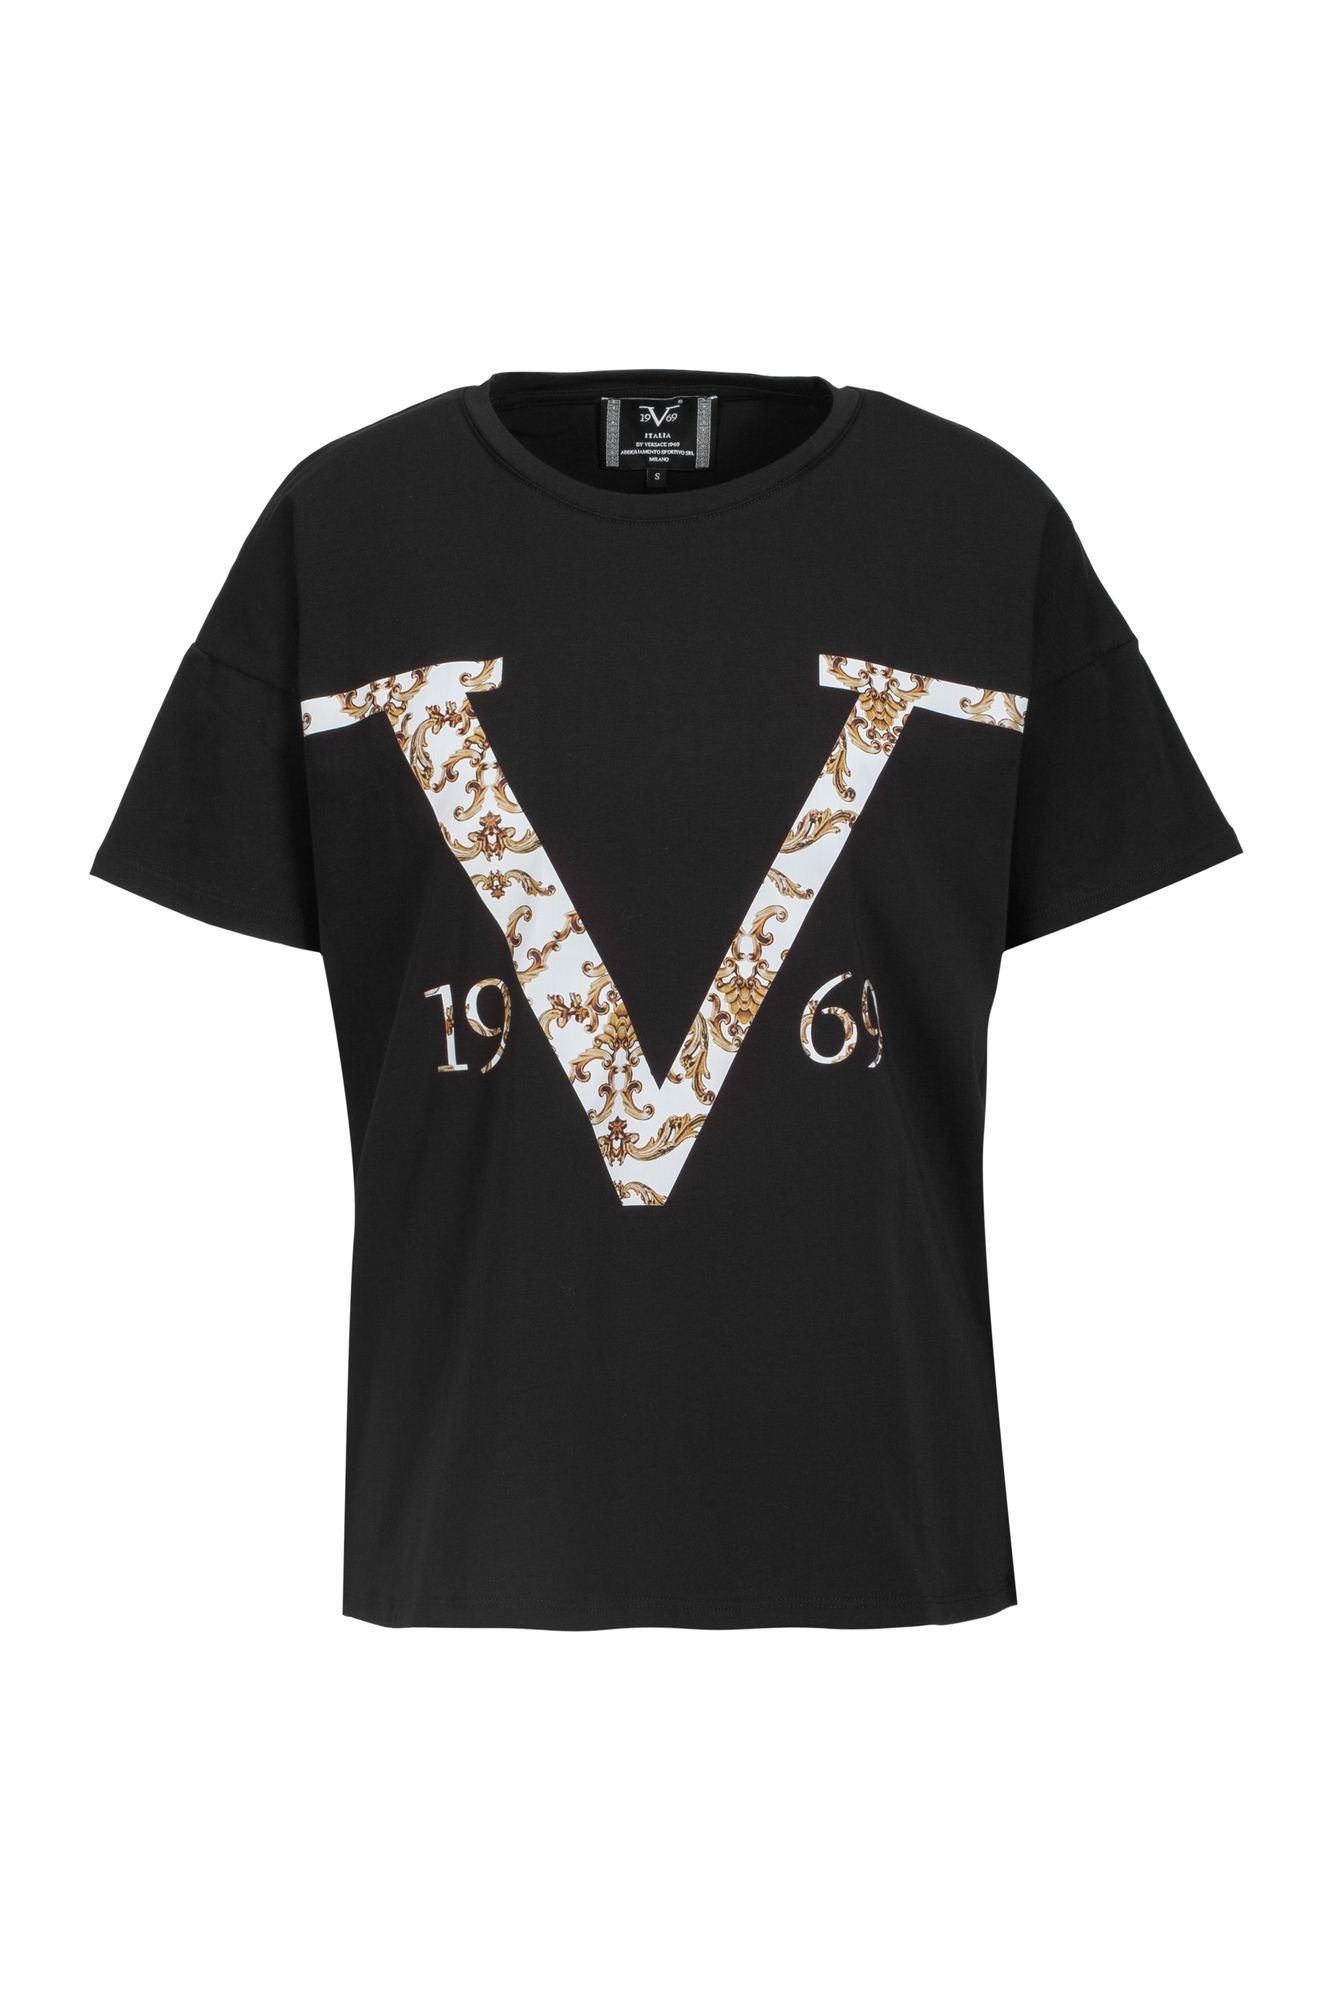 19V69 Italia by Versace T-Shirt by Versace Sportivo SRL - Josephine BLACK